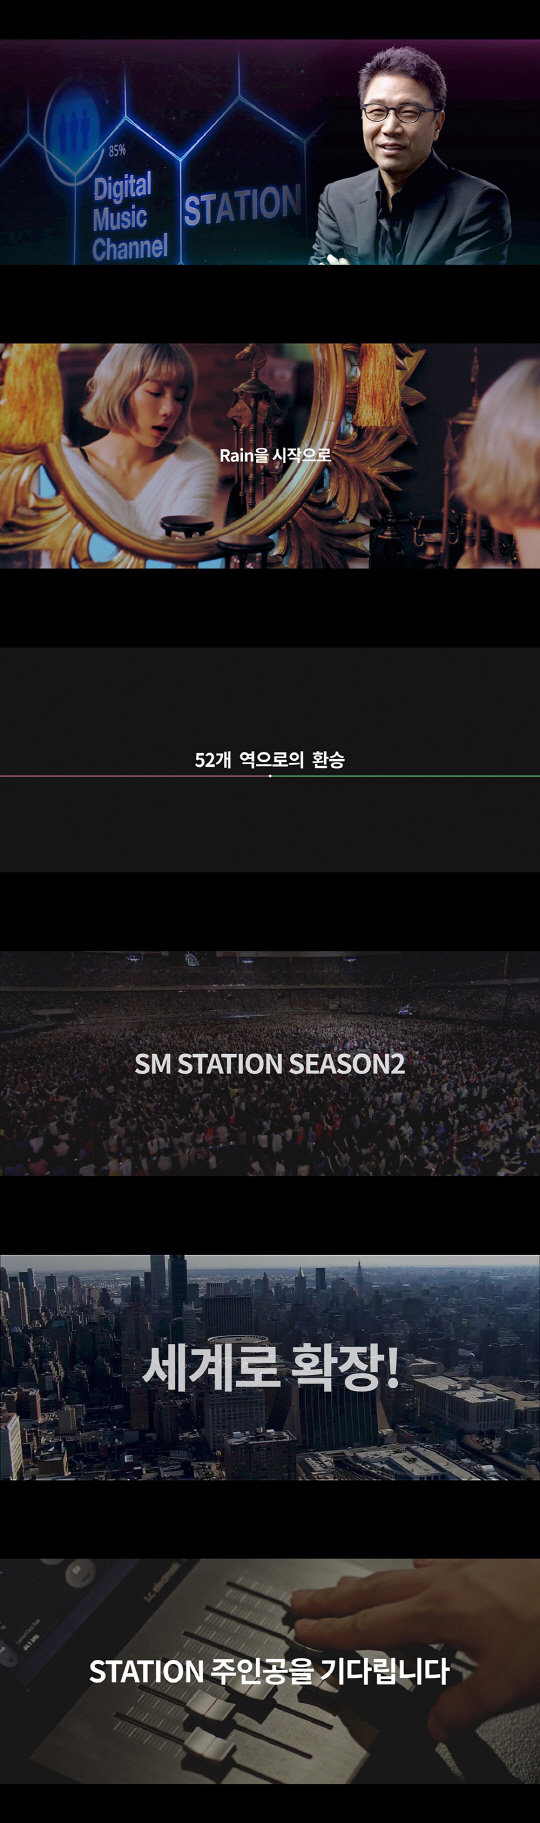 SM ‘STATION’, 3월 중 첫 번째 음원 공개 시작으로 새로운 시즌 연다